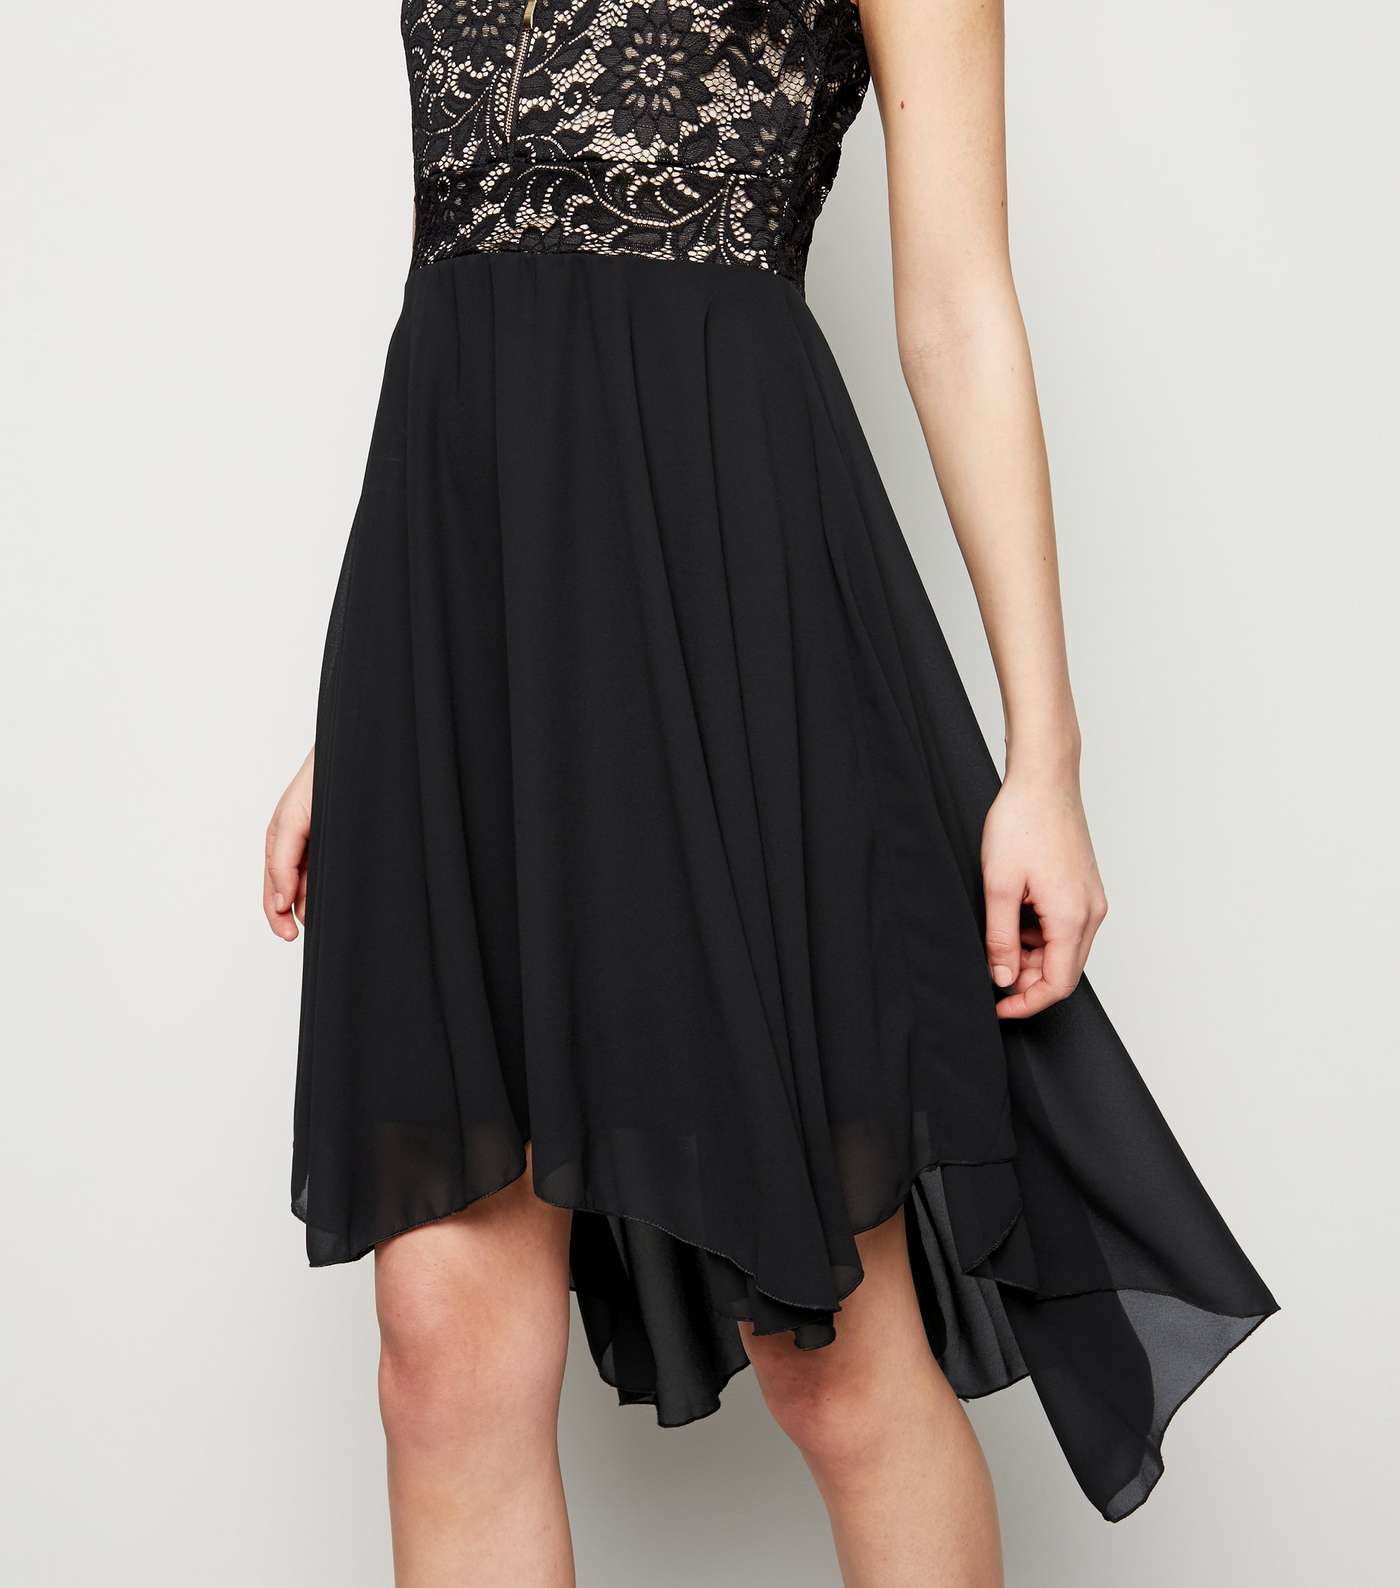 Mela Black Lace Zip Dip Hem Dress Image 5